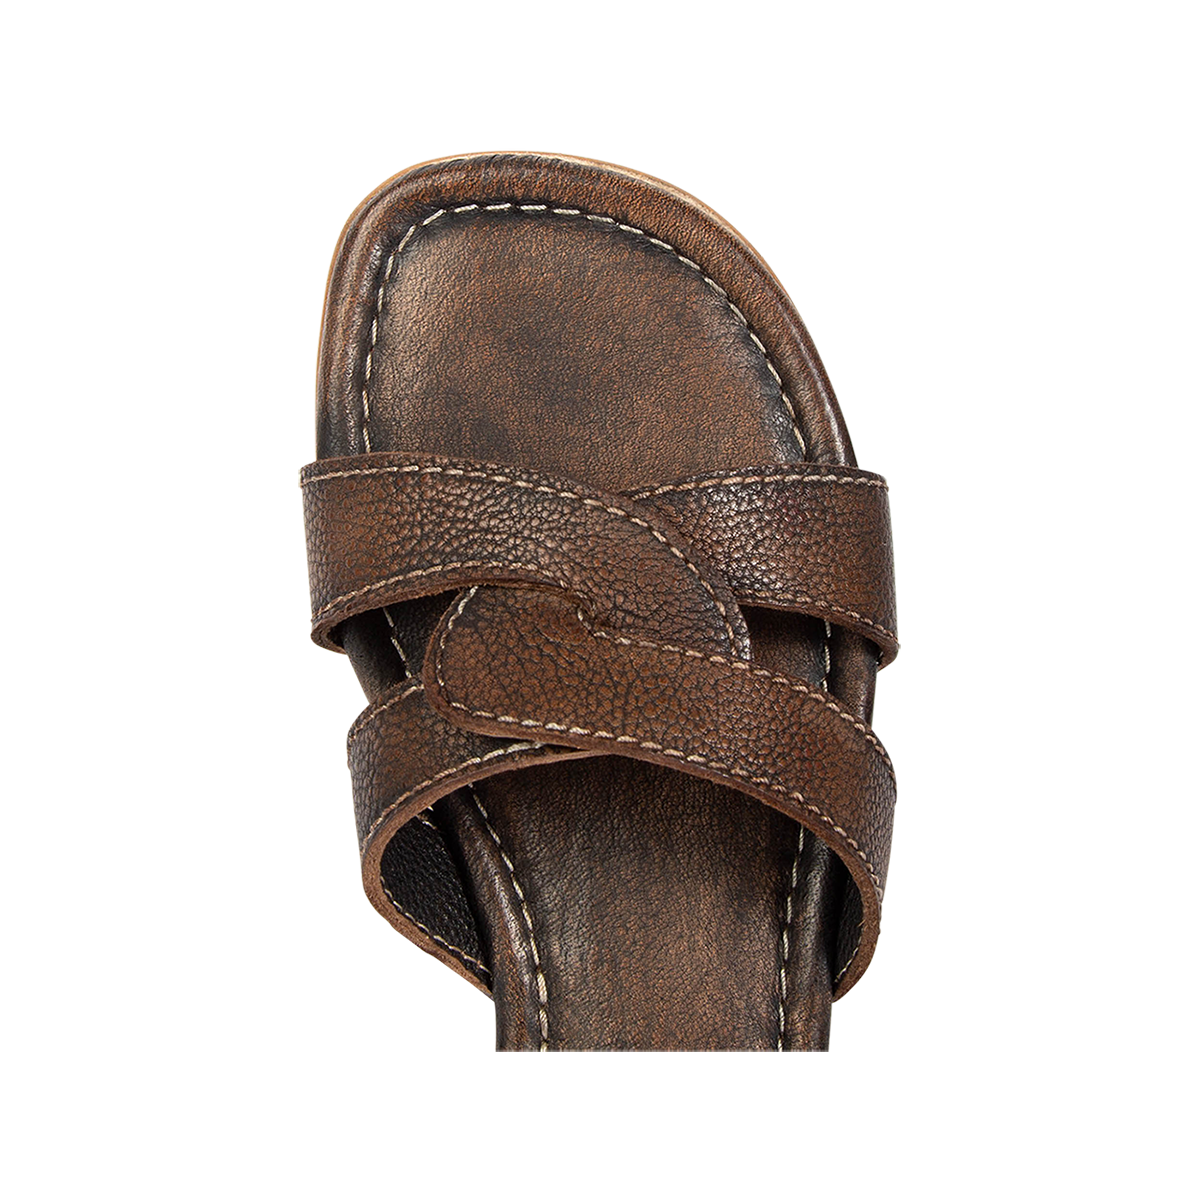 Top view showing criss-cross leather foot strap on FREEBIRD women's Sawyer black low heeled sandal